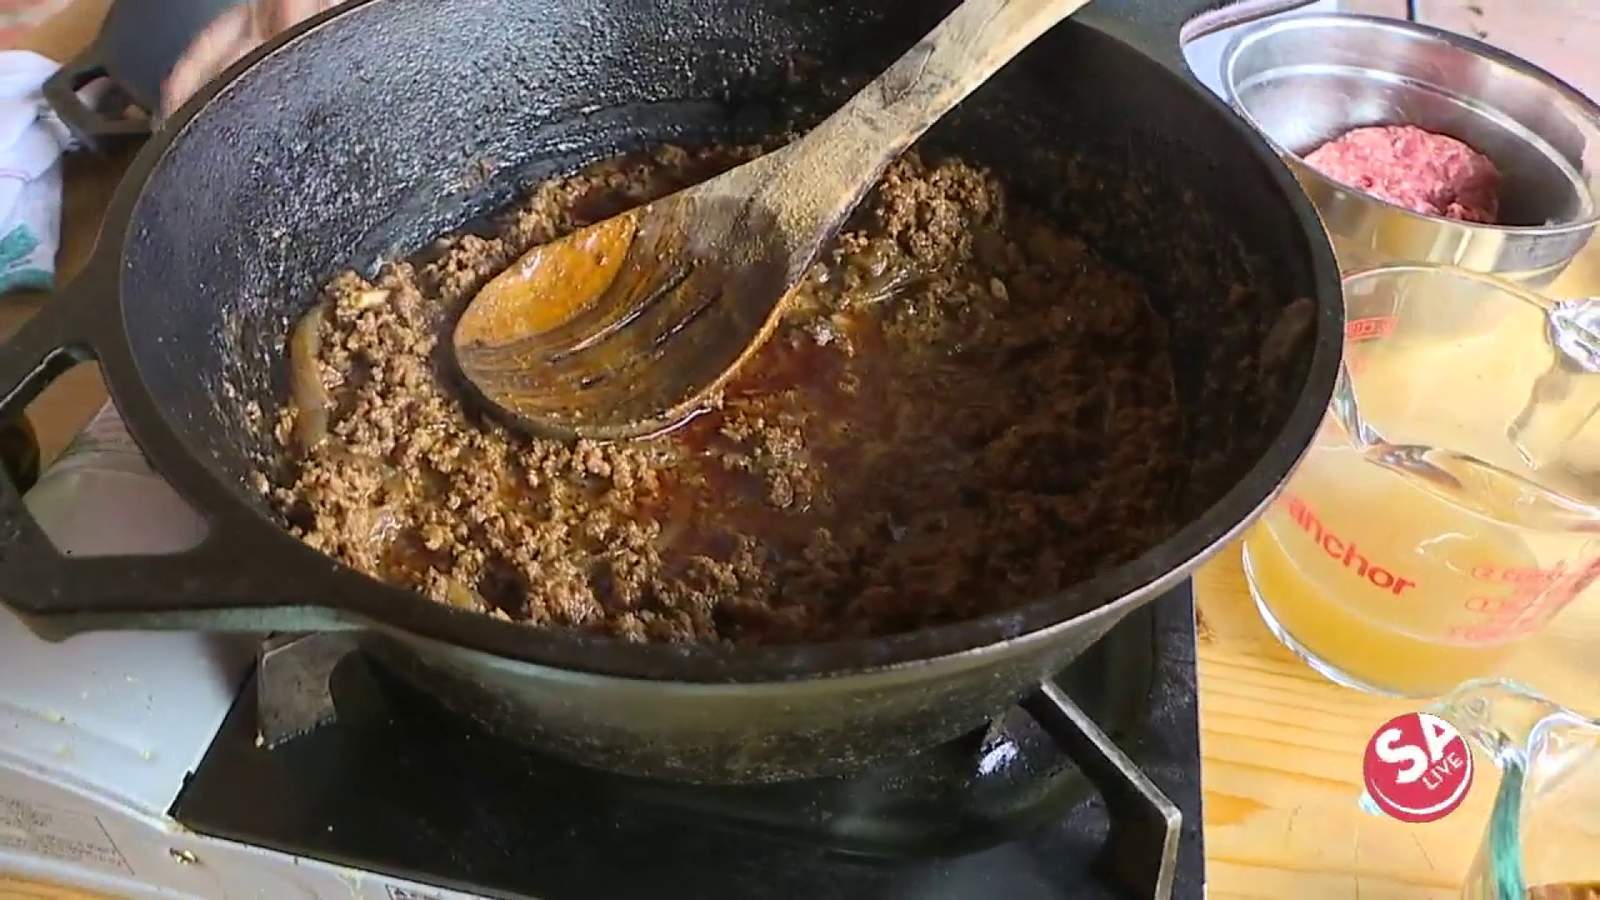 Recipe: Venison chili for less than $3